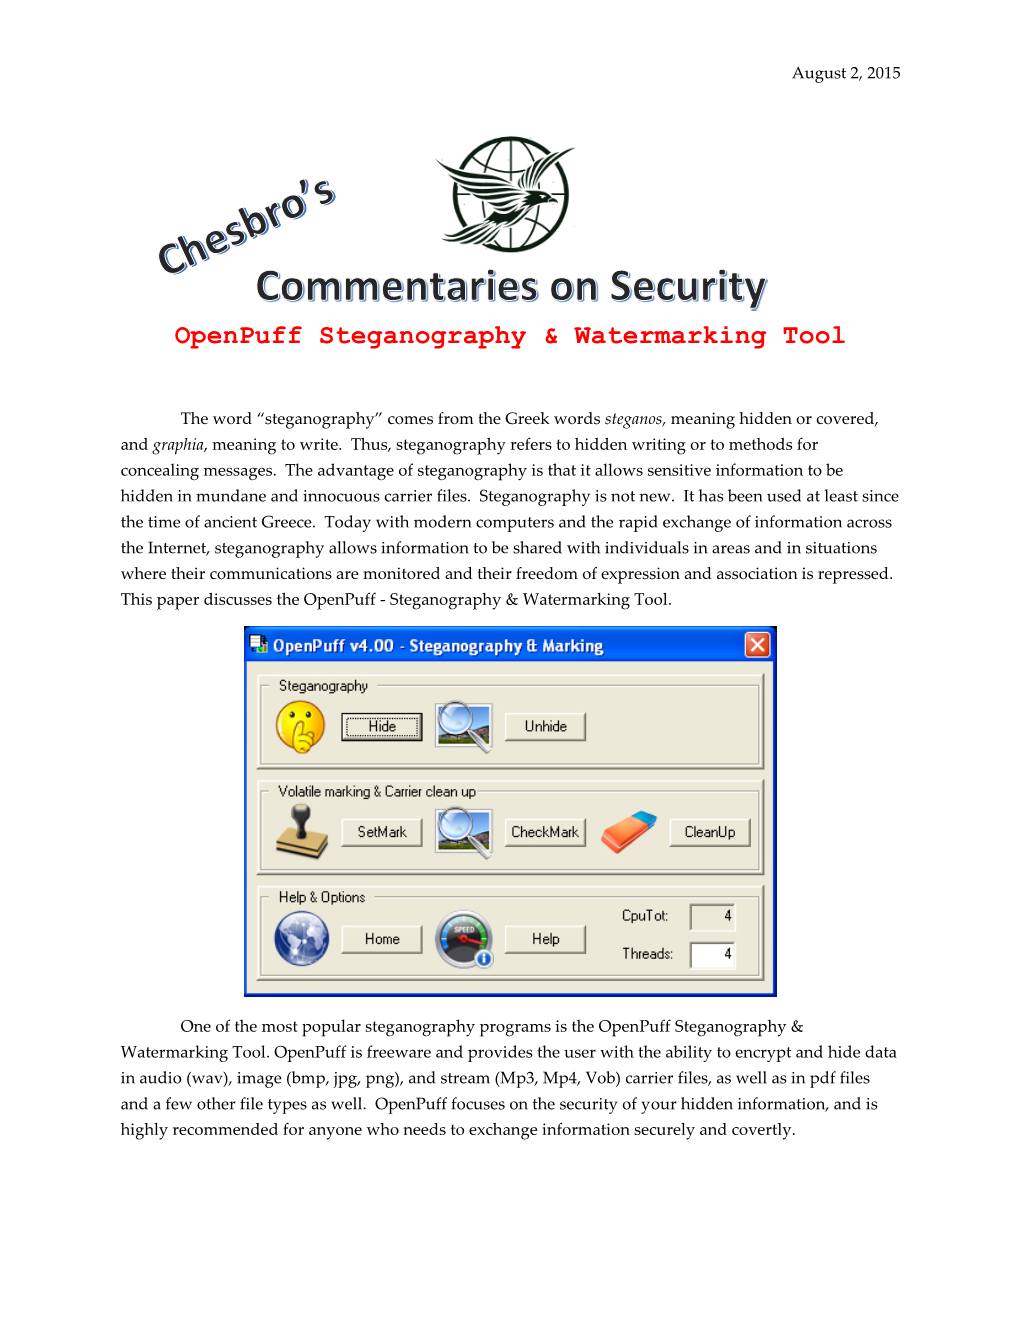 Openpuff Steganography & Watermarking Tool